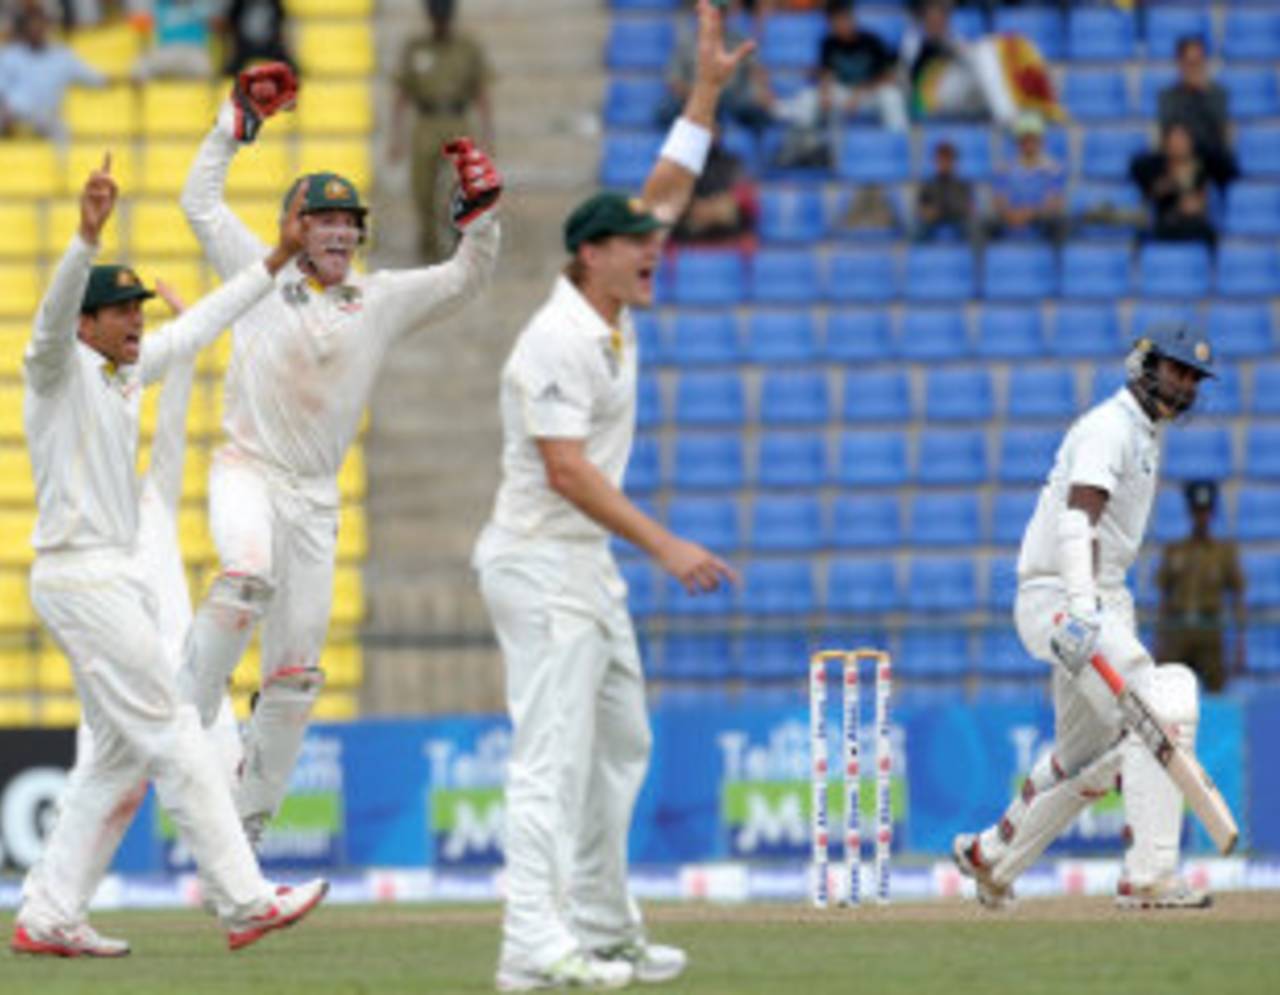 Australia are convinced they have Tharanga Paranavitana caught behind, Sri Lanka v Australia, 2nd Test, Pallekele, 4th day, September 11, 2011